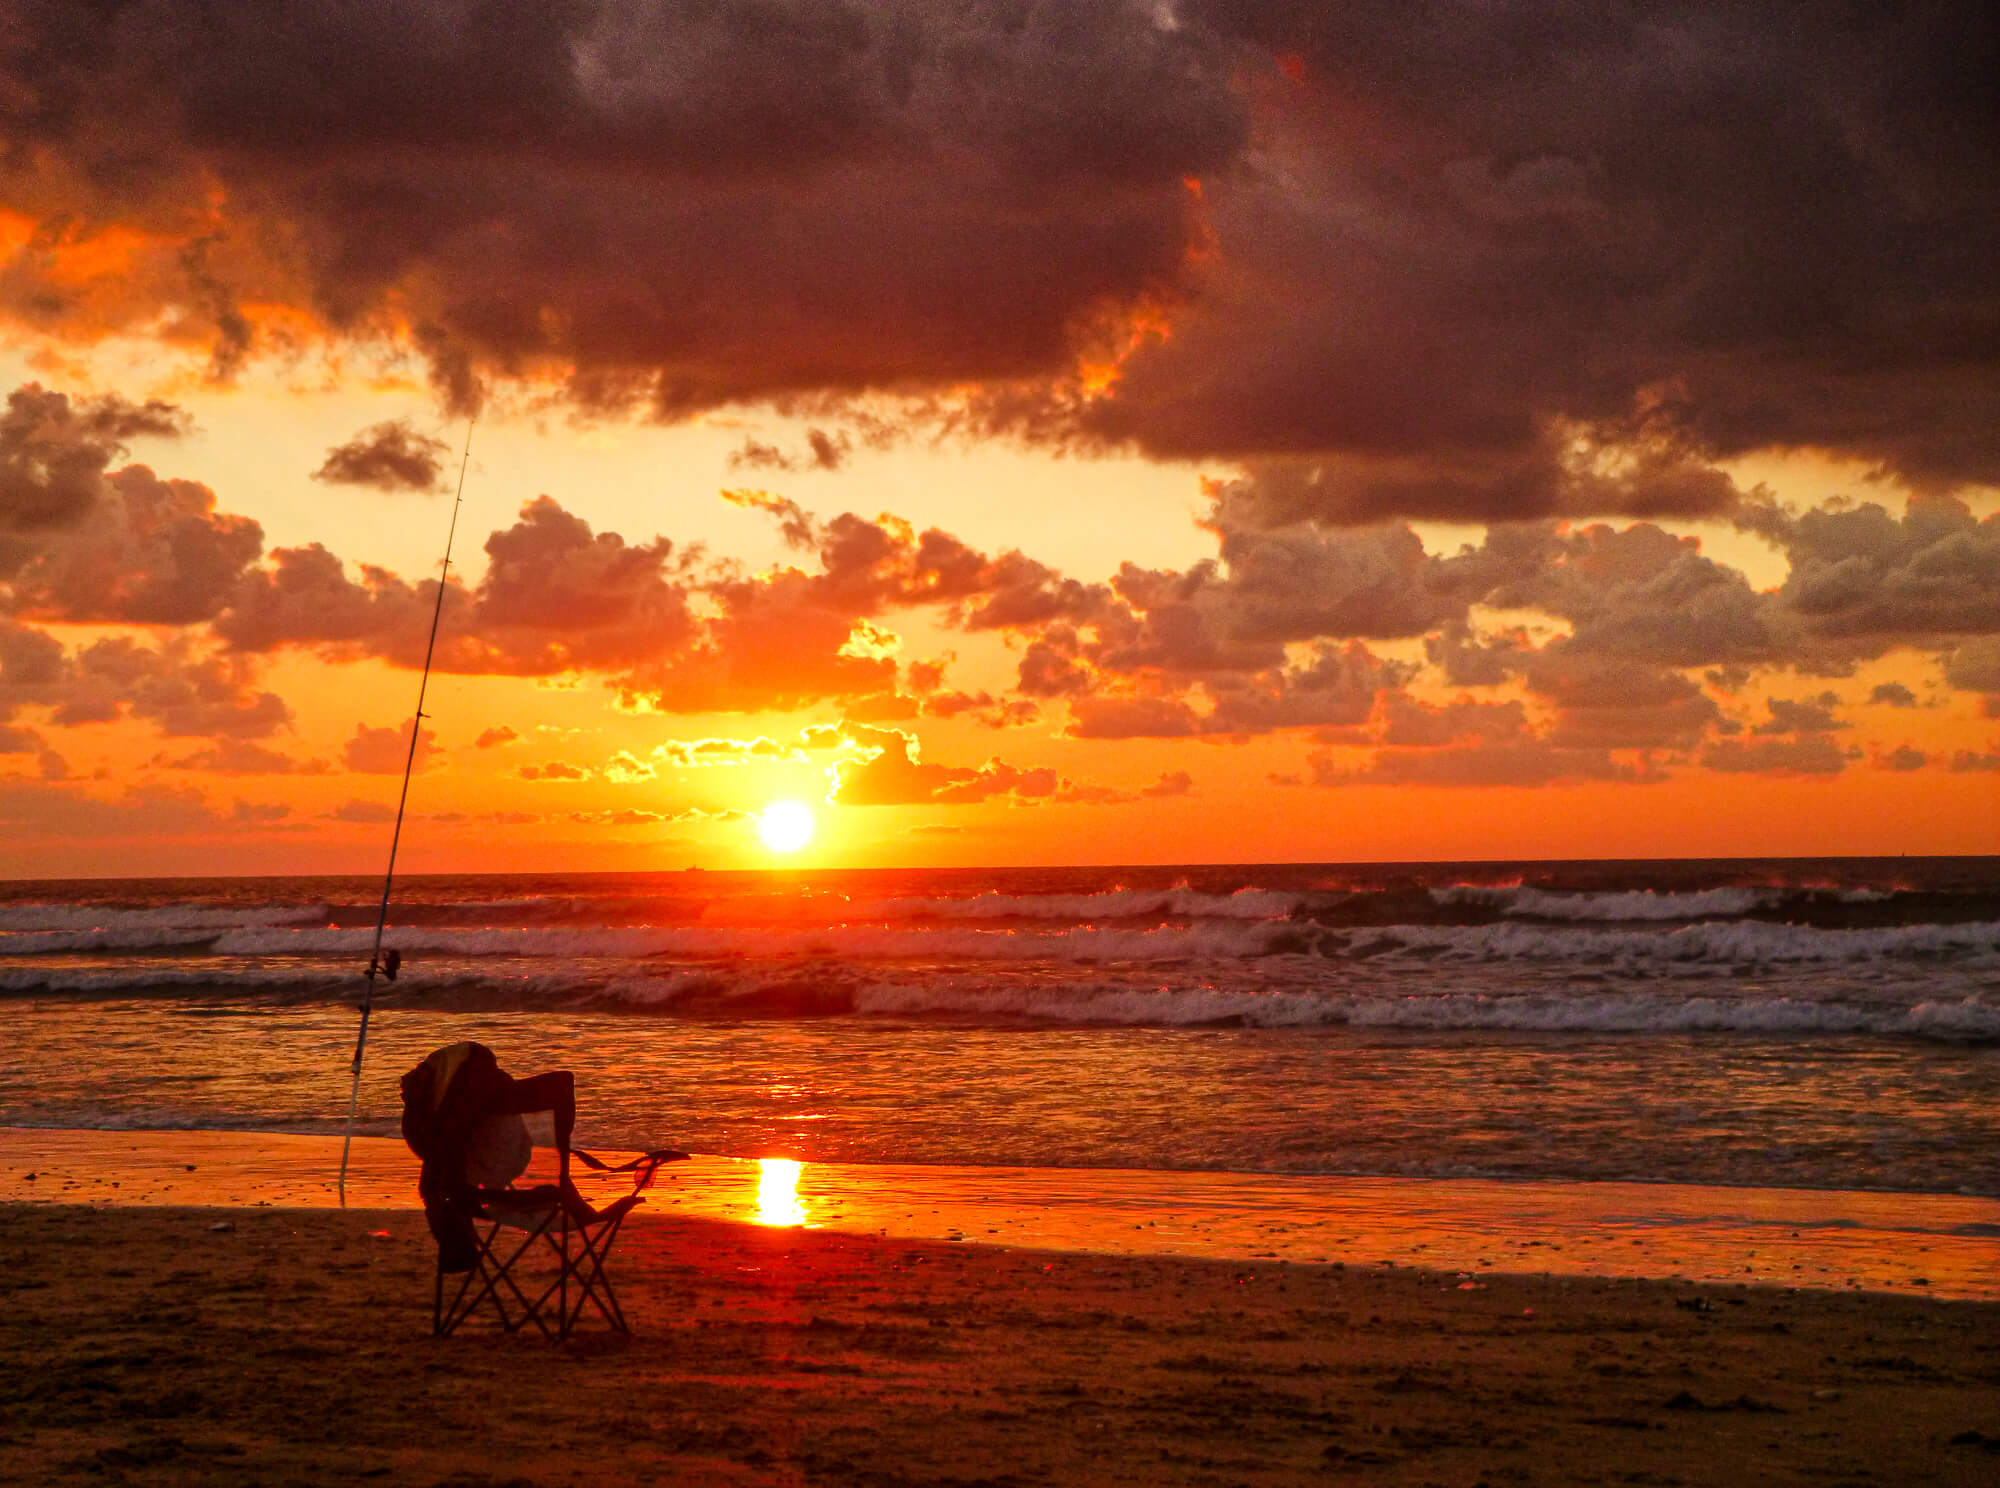 Haifa Beach sunset - things to do on Israel's beaches